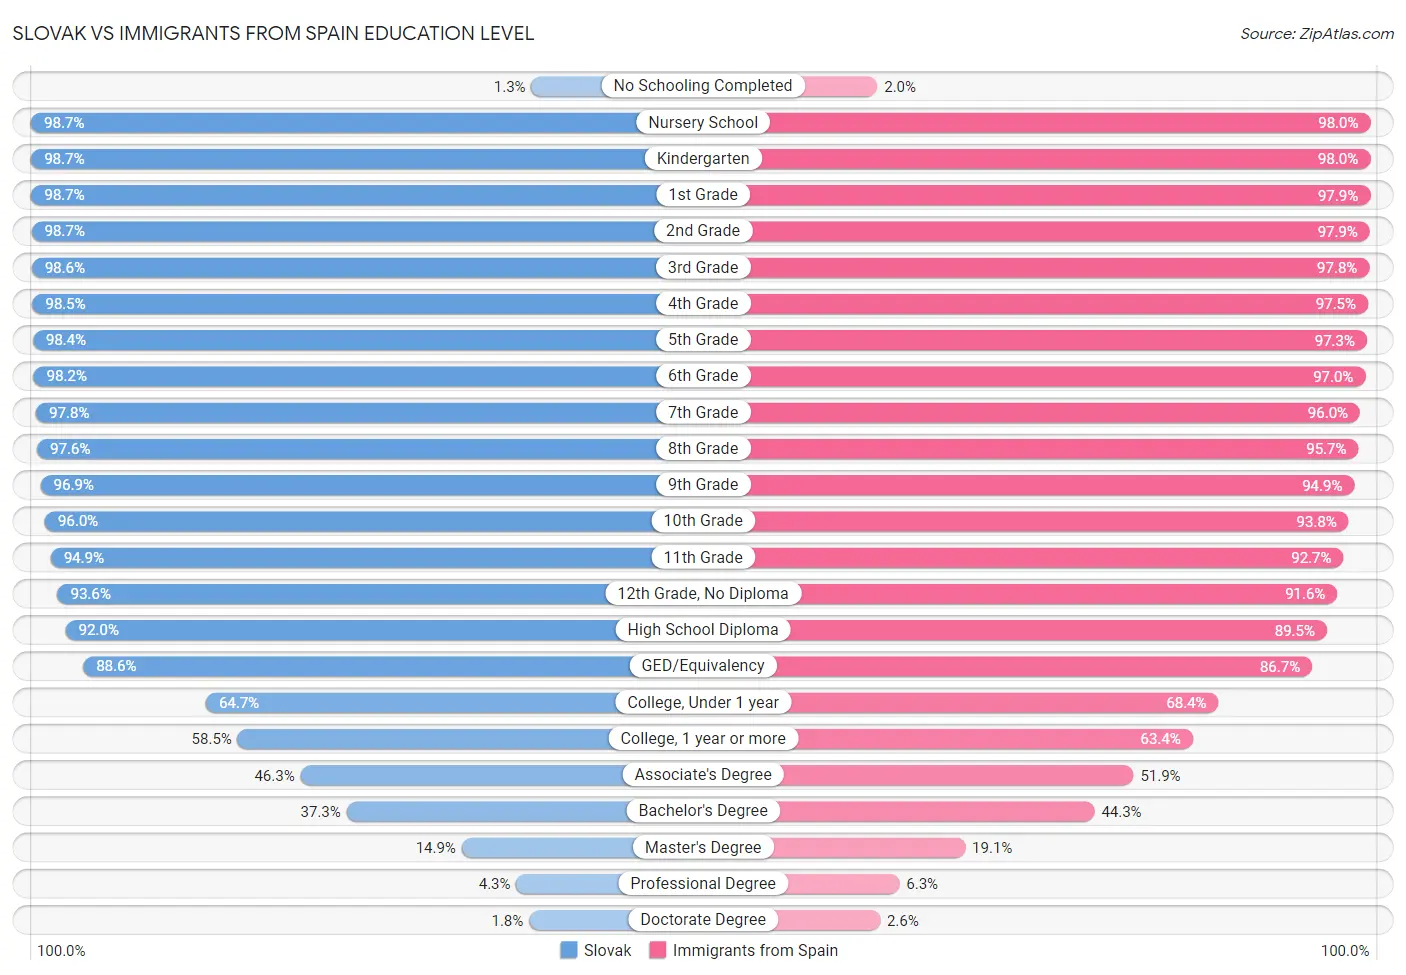 Slovak vs Immigrants from Spain Education Level